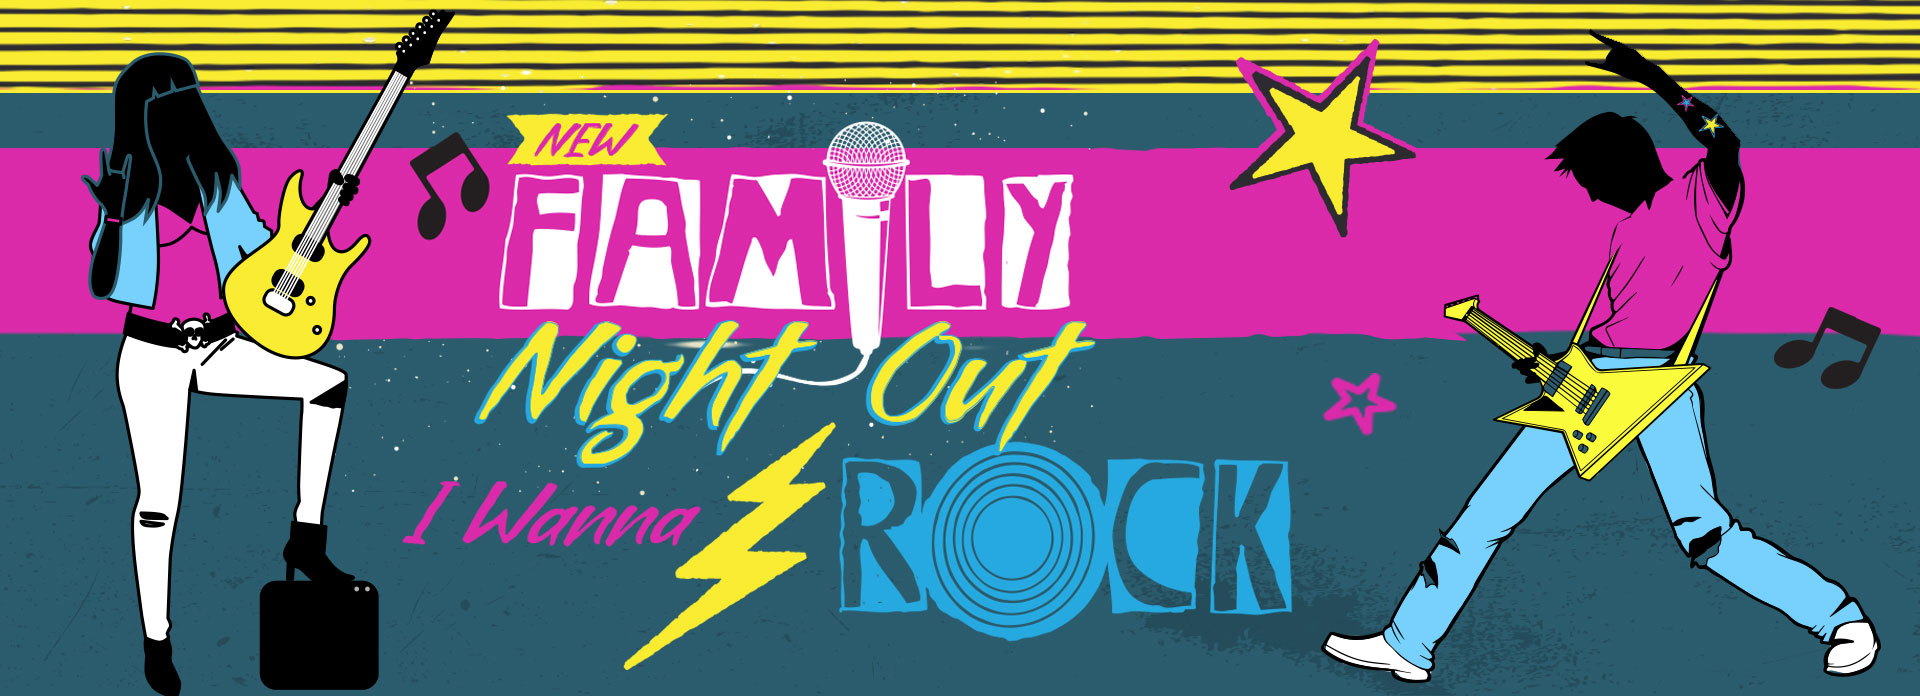 Family Night Out: I Wanna Rock!